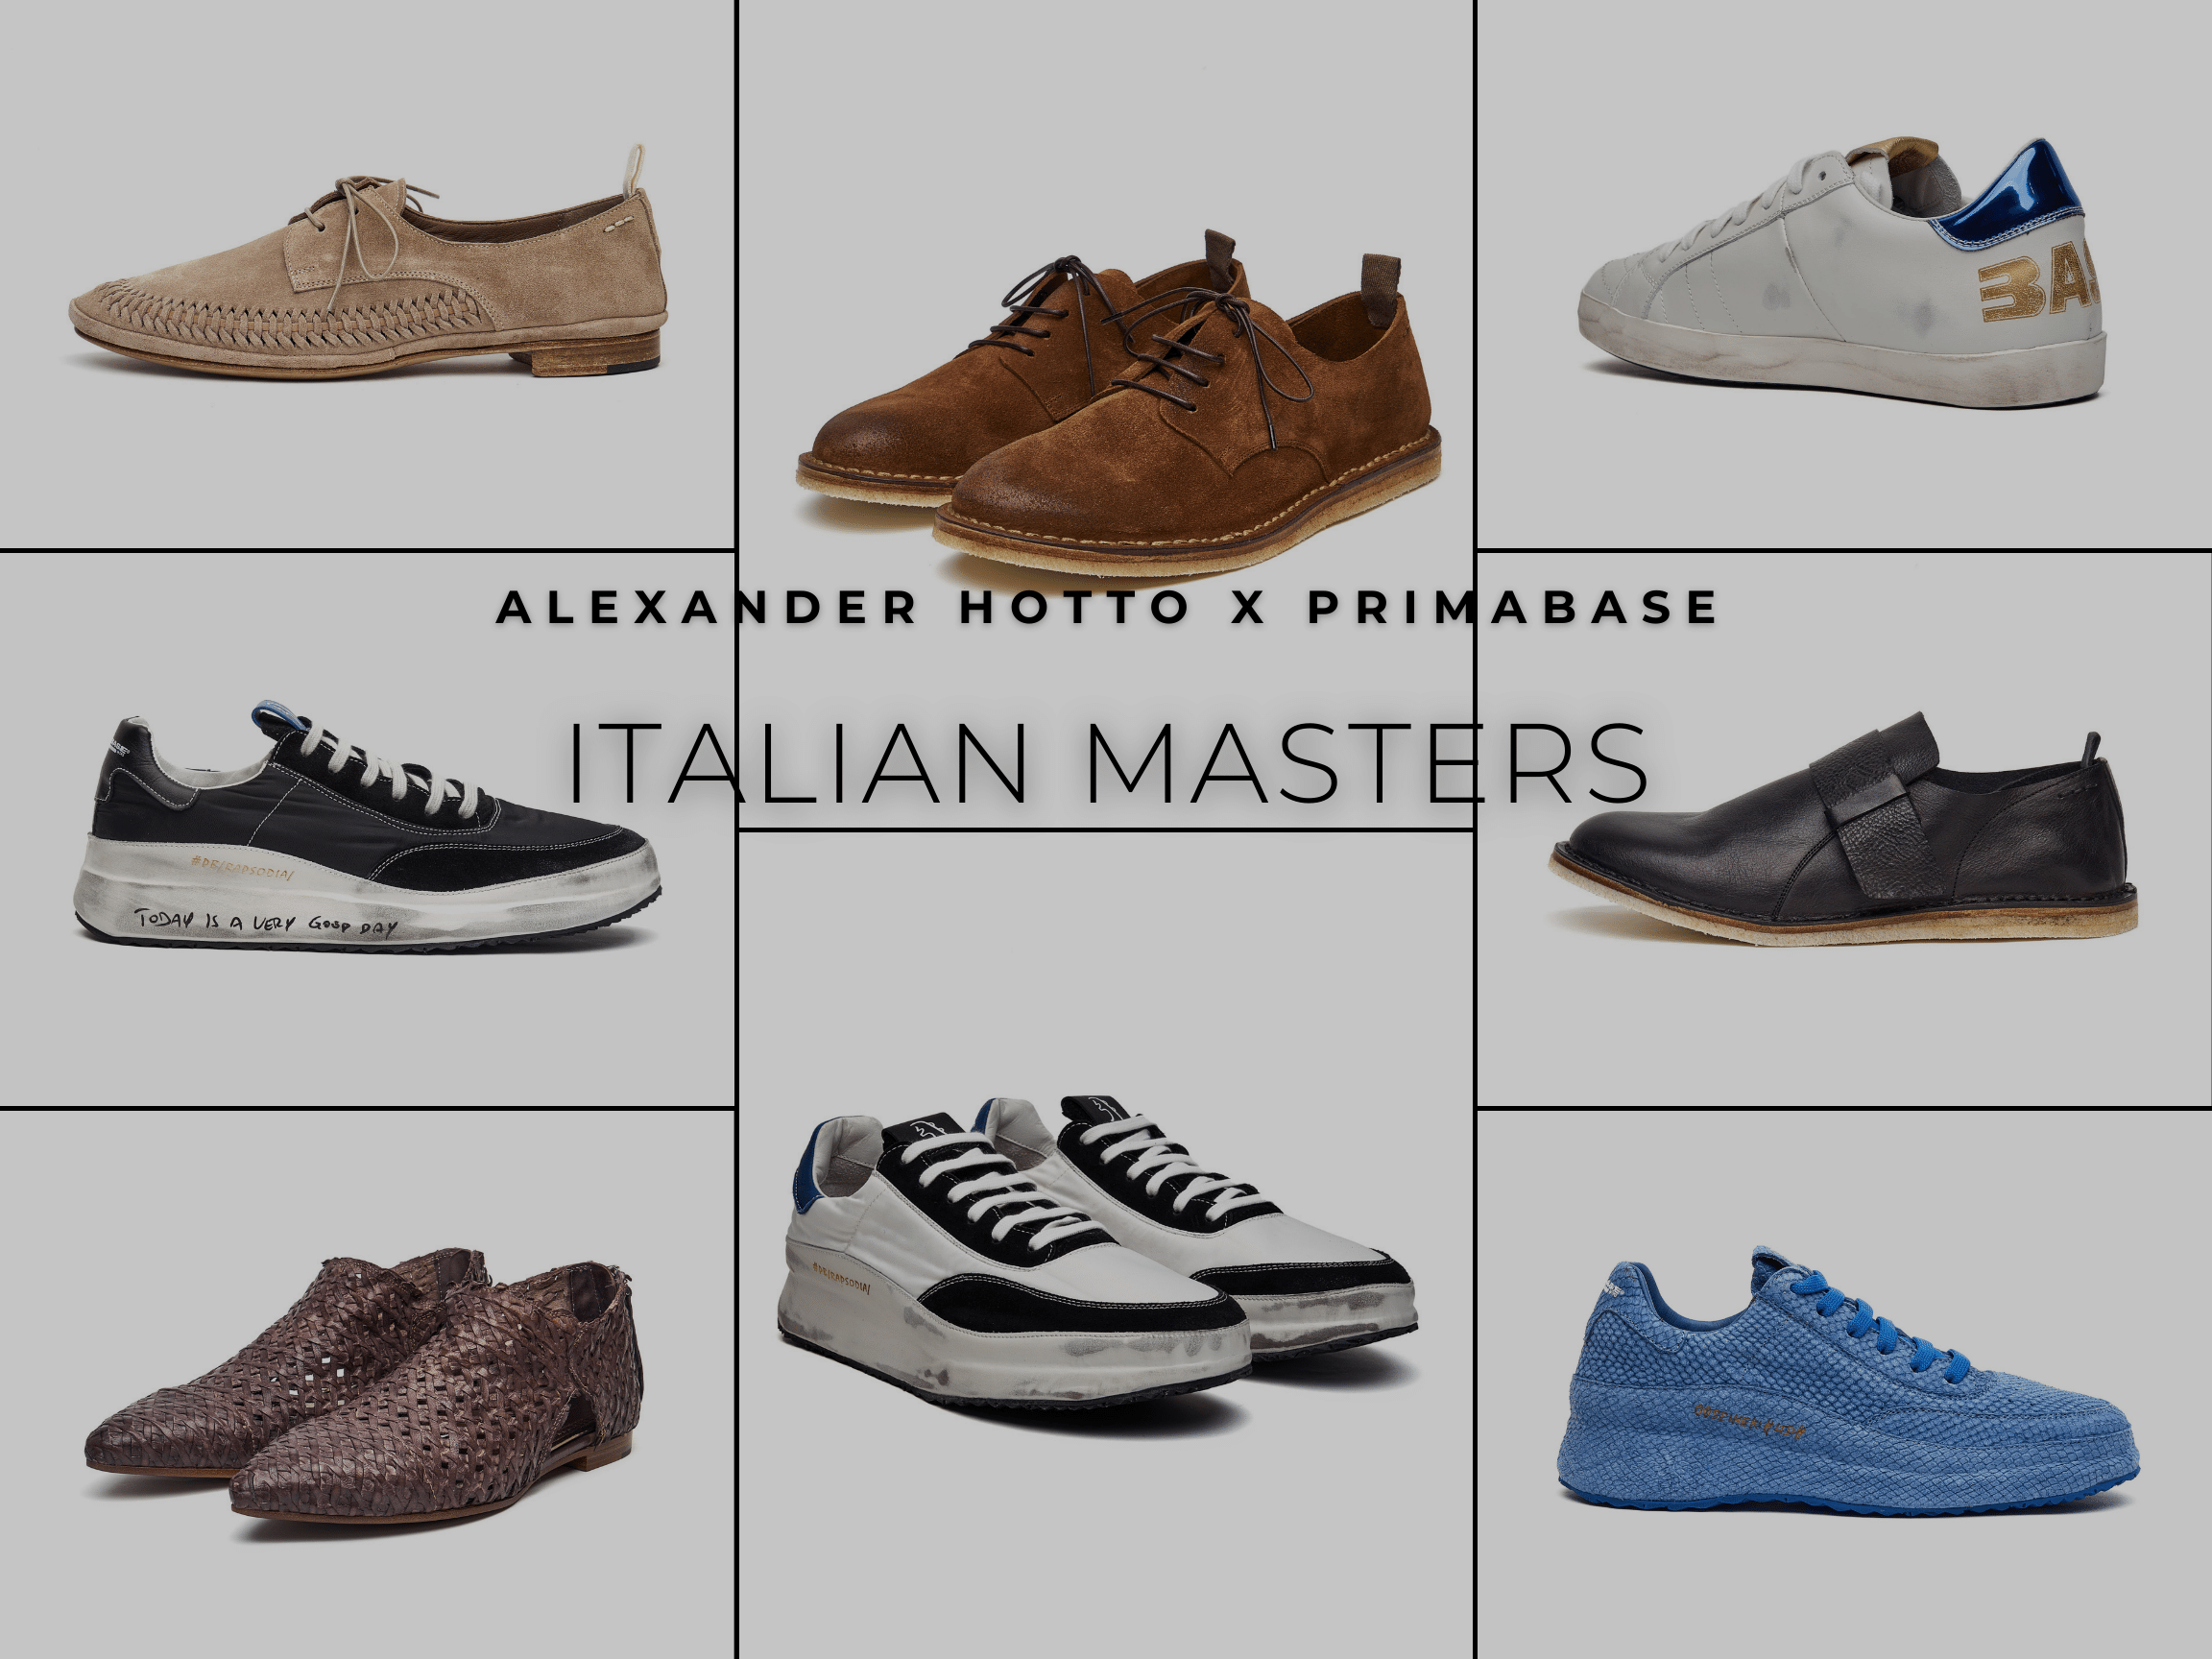 Italian Masters Alexander Hotto X Primabase